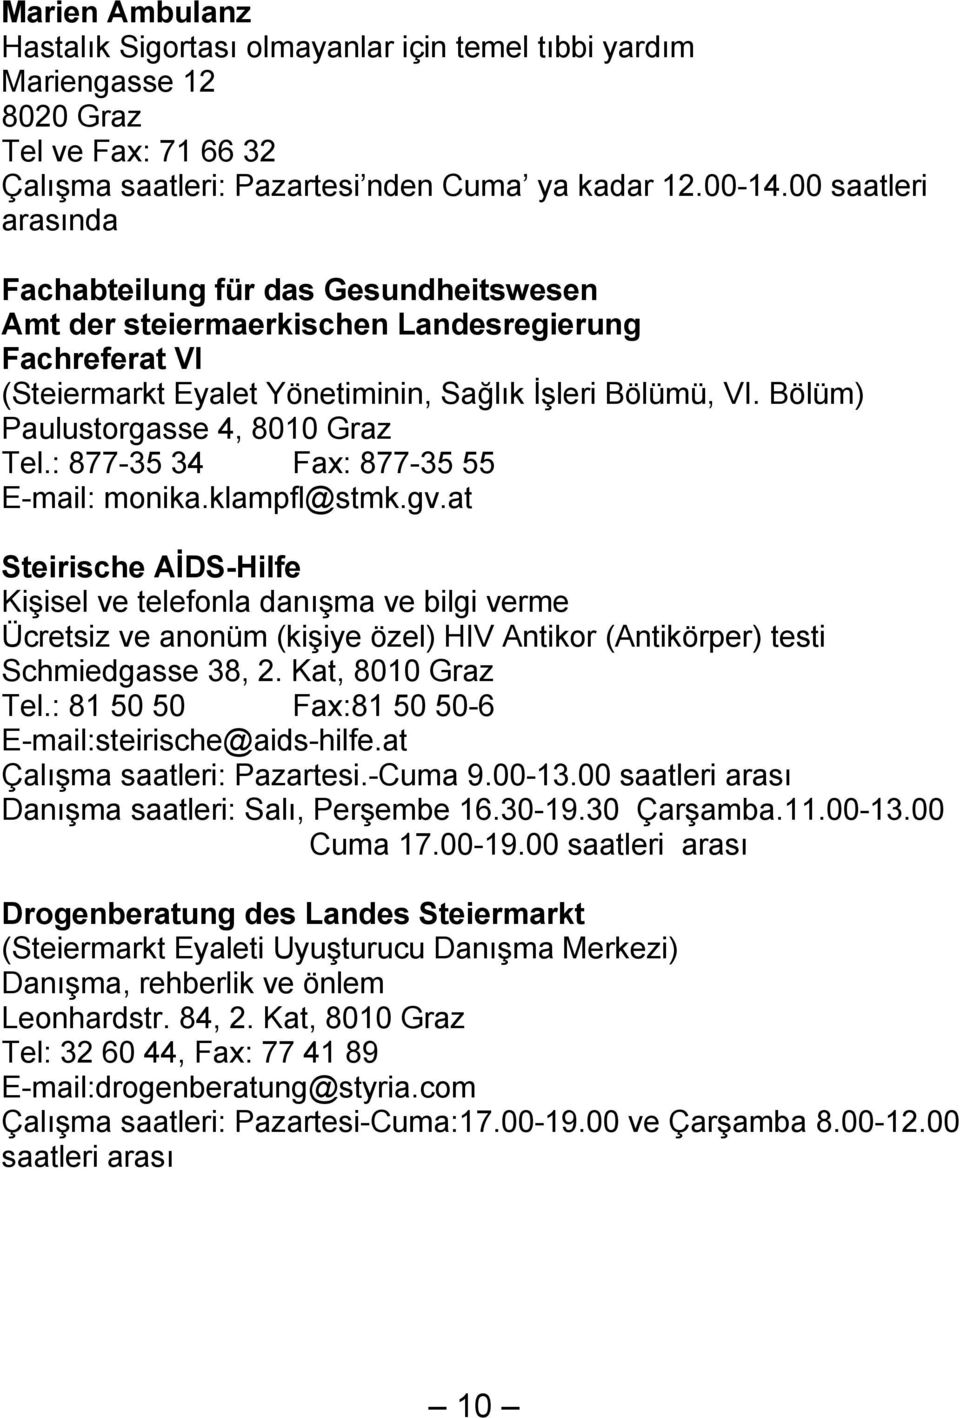 Bölüm) Paulustorgasse 4, 8010 Graz Tel.: 877-35 34 Fax: 877-35 55 E-mail: monika.klampfl@stmk.gv.